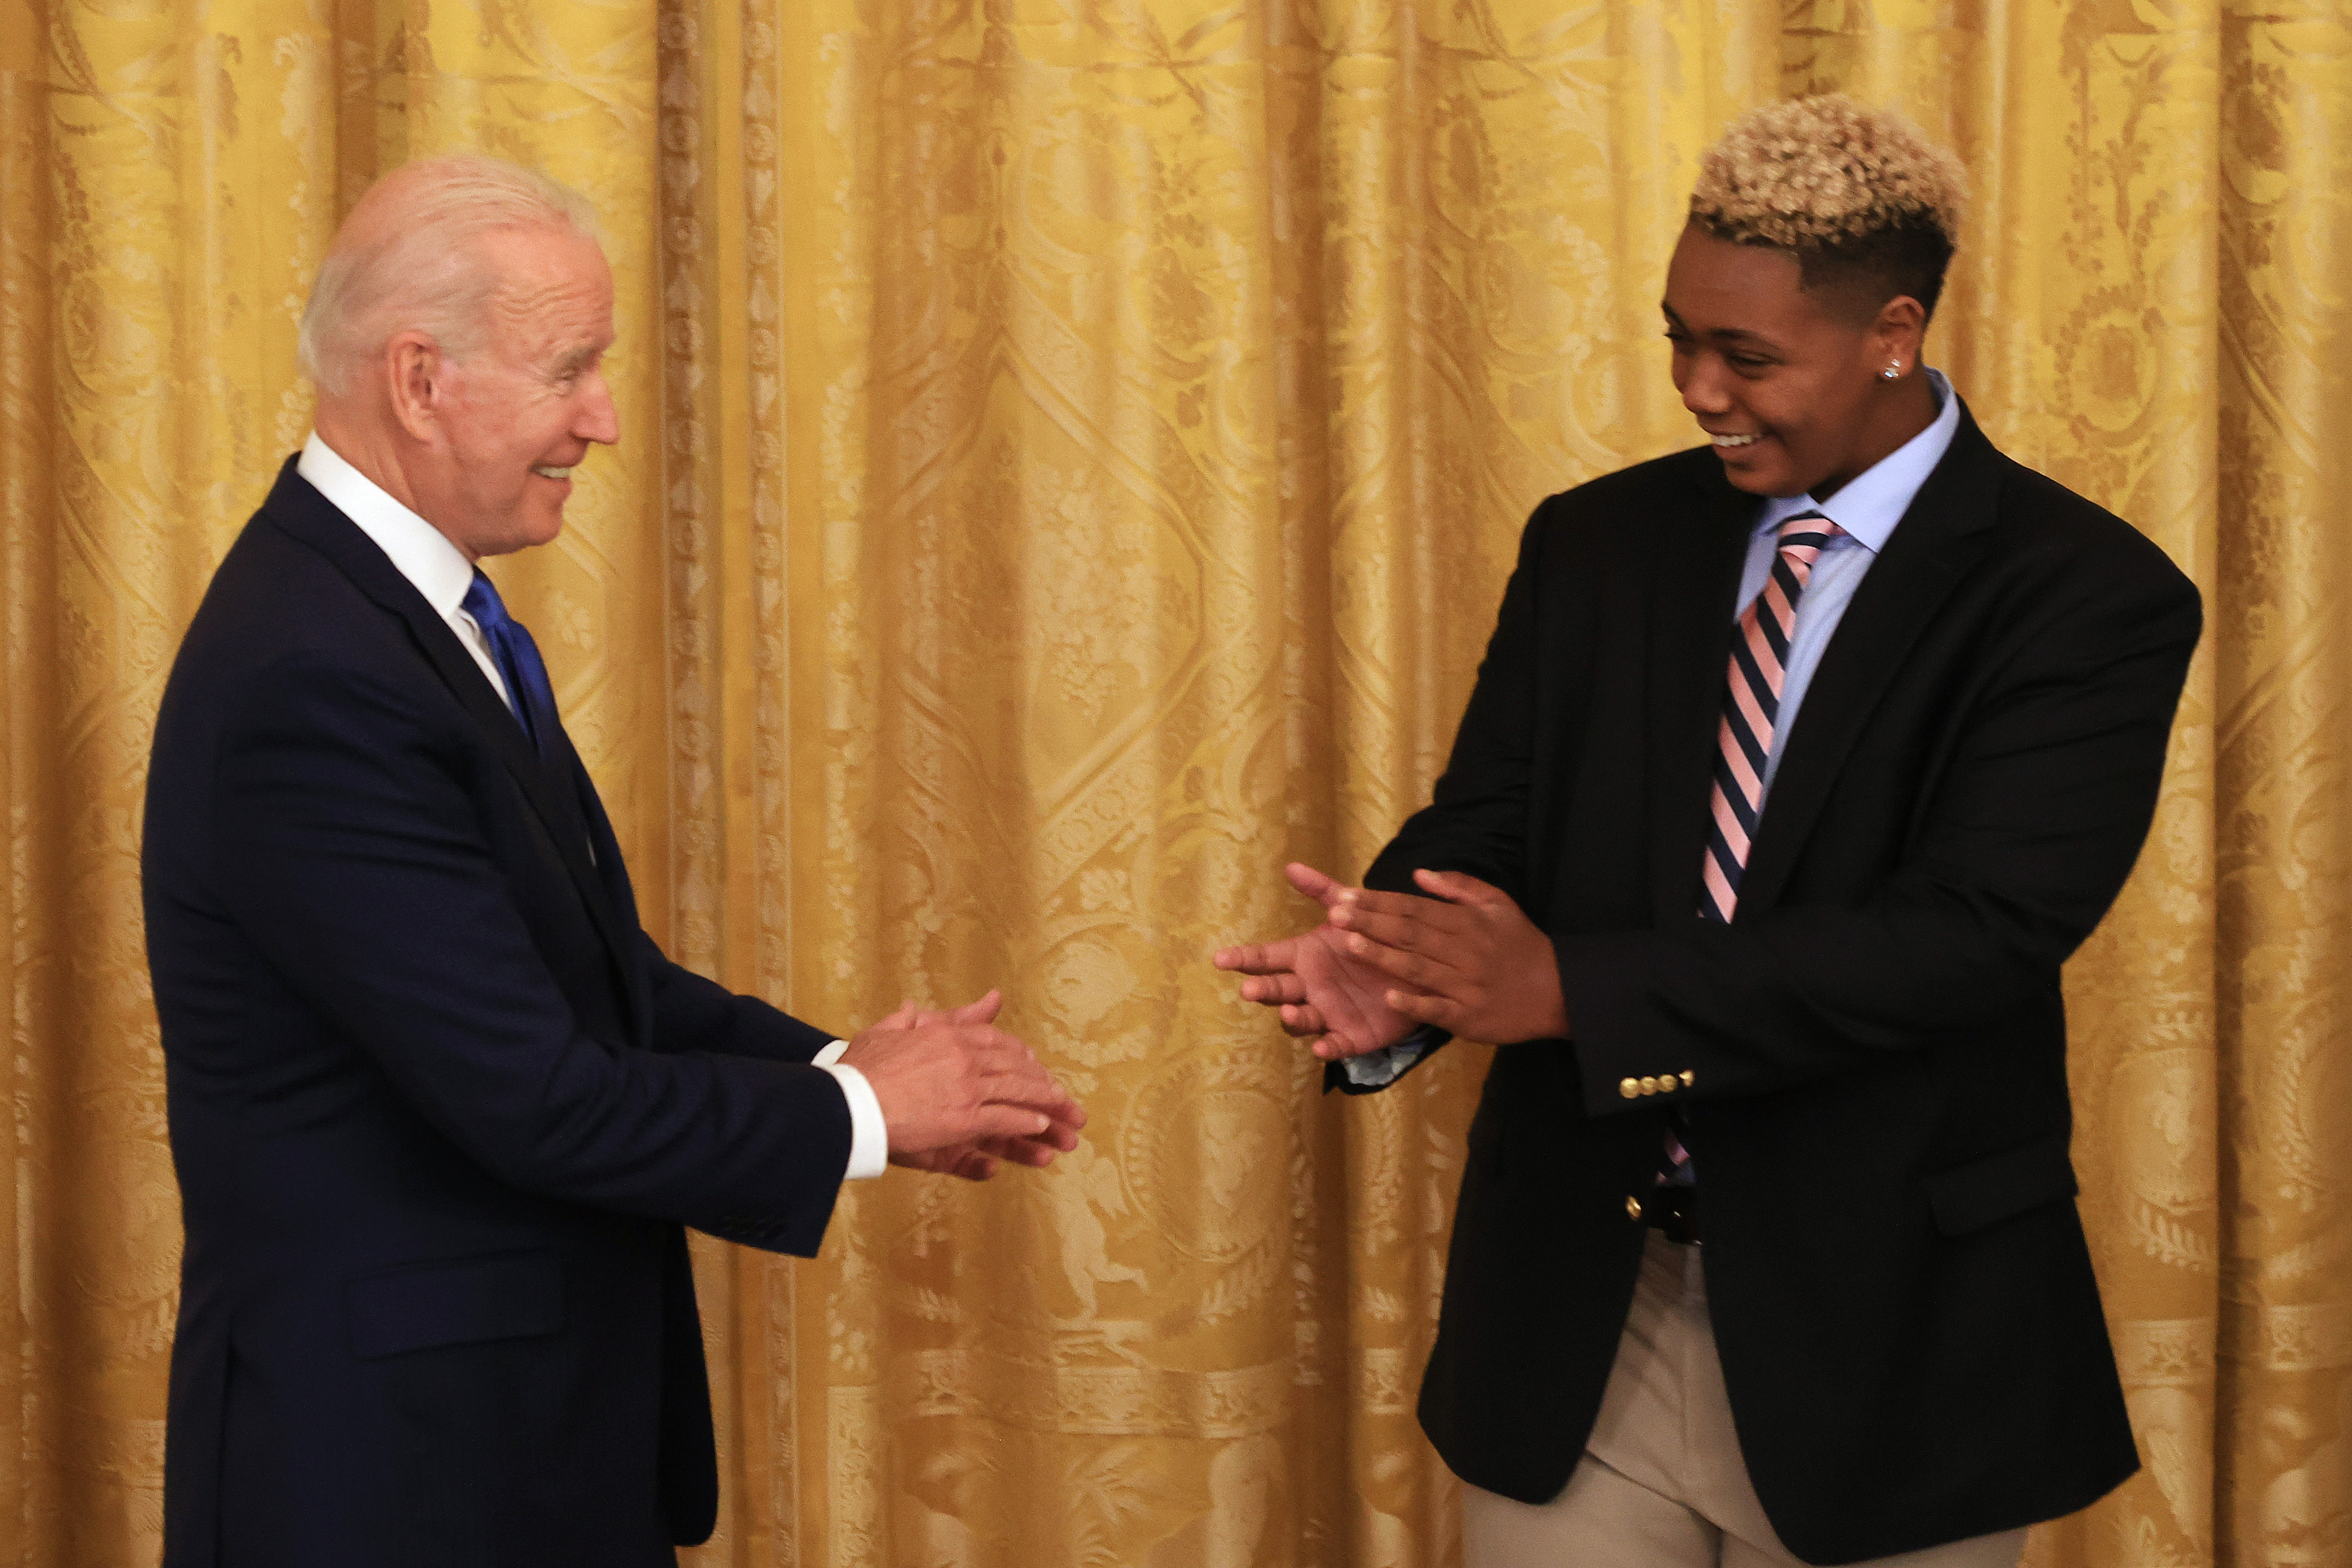 President Biden And Transportation Secretary Buttigieg Commemorate Pride Month